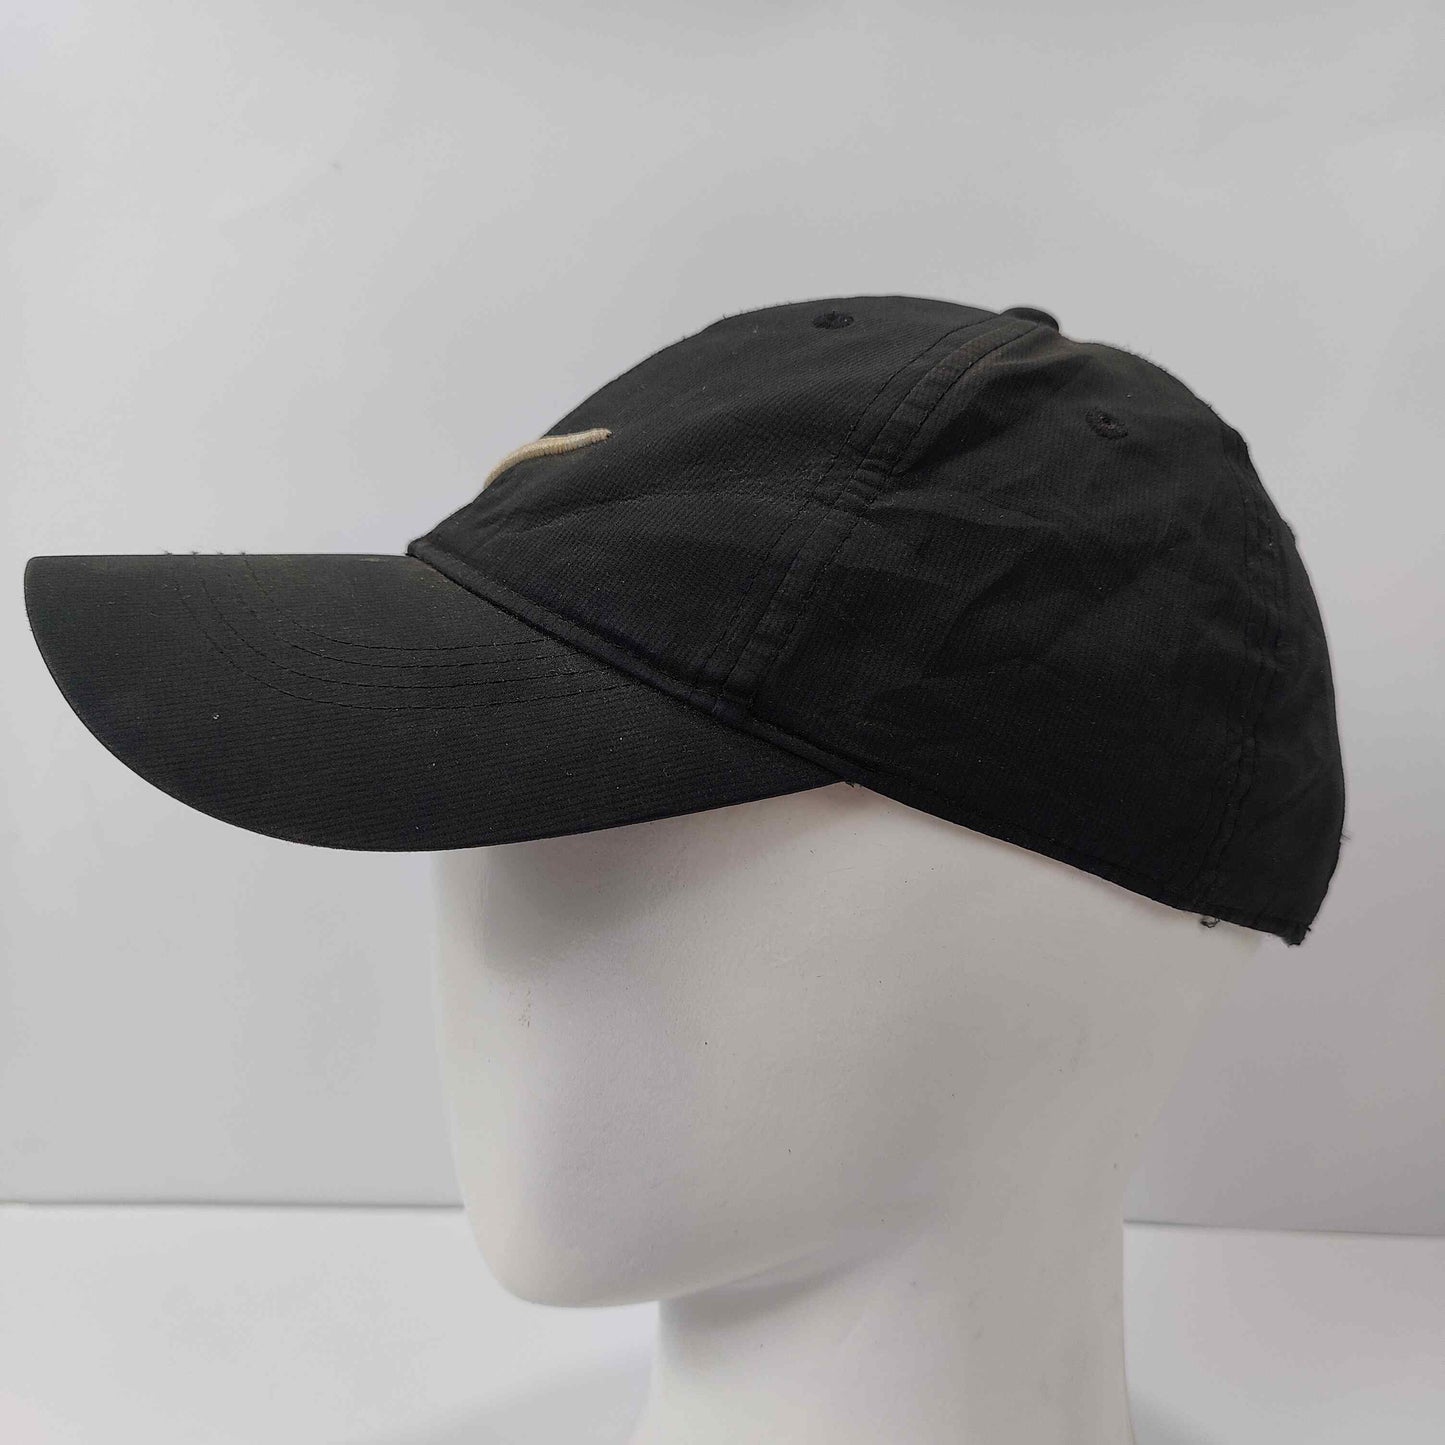 Nike Heritage Training Cap - Black - 1250